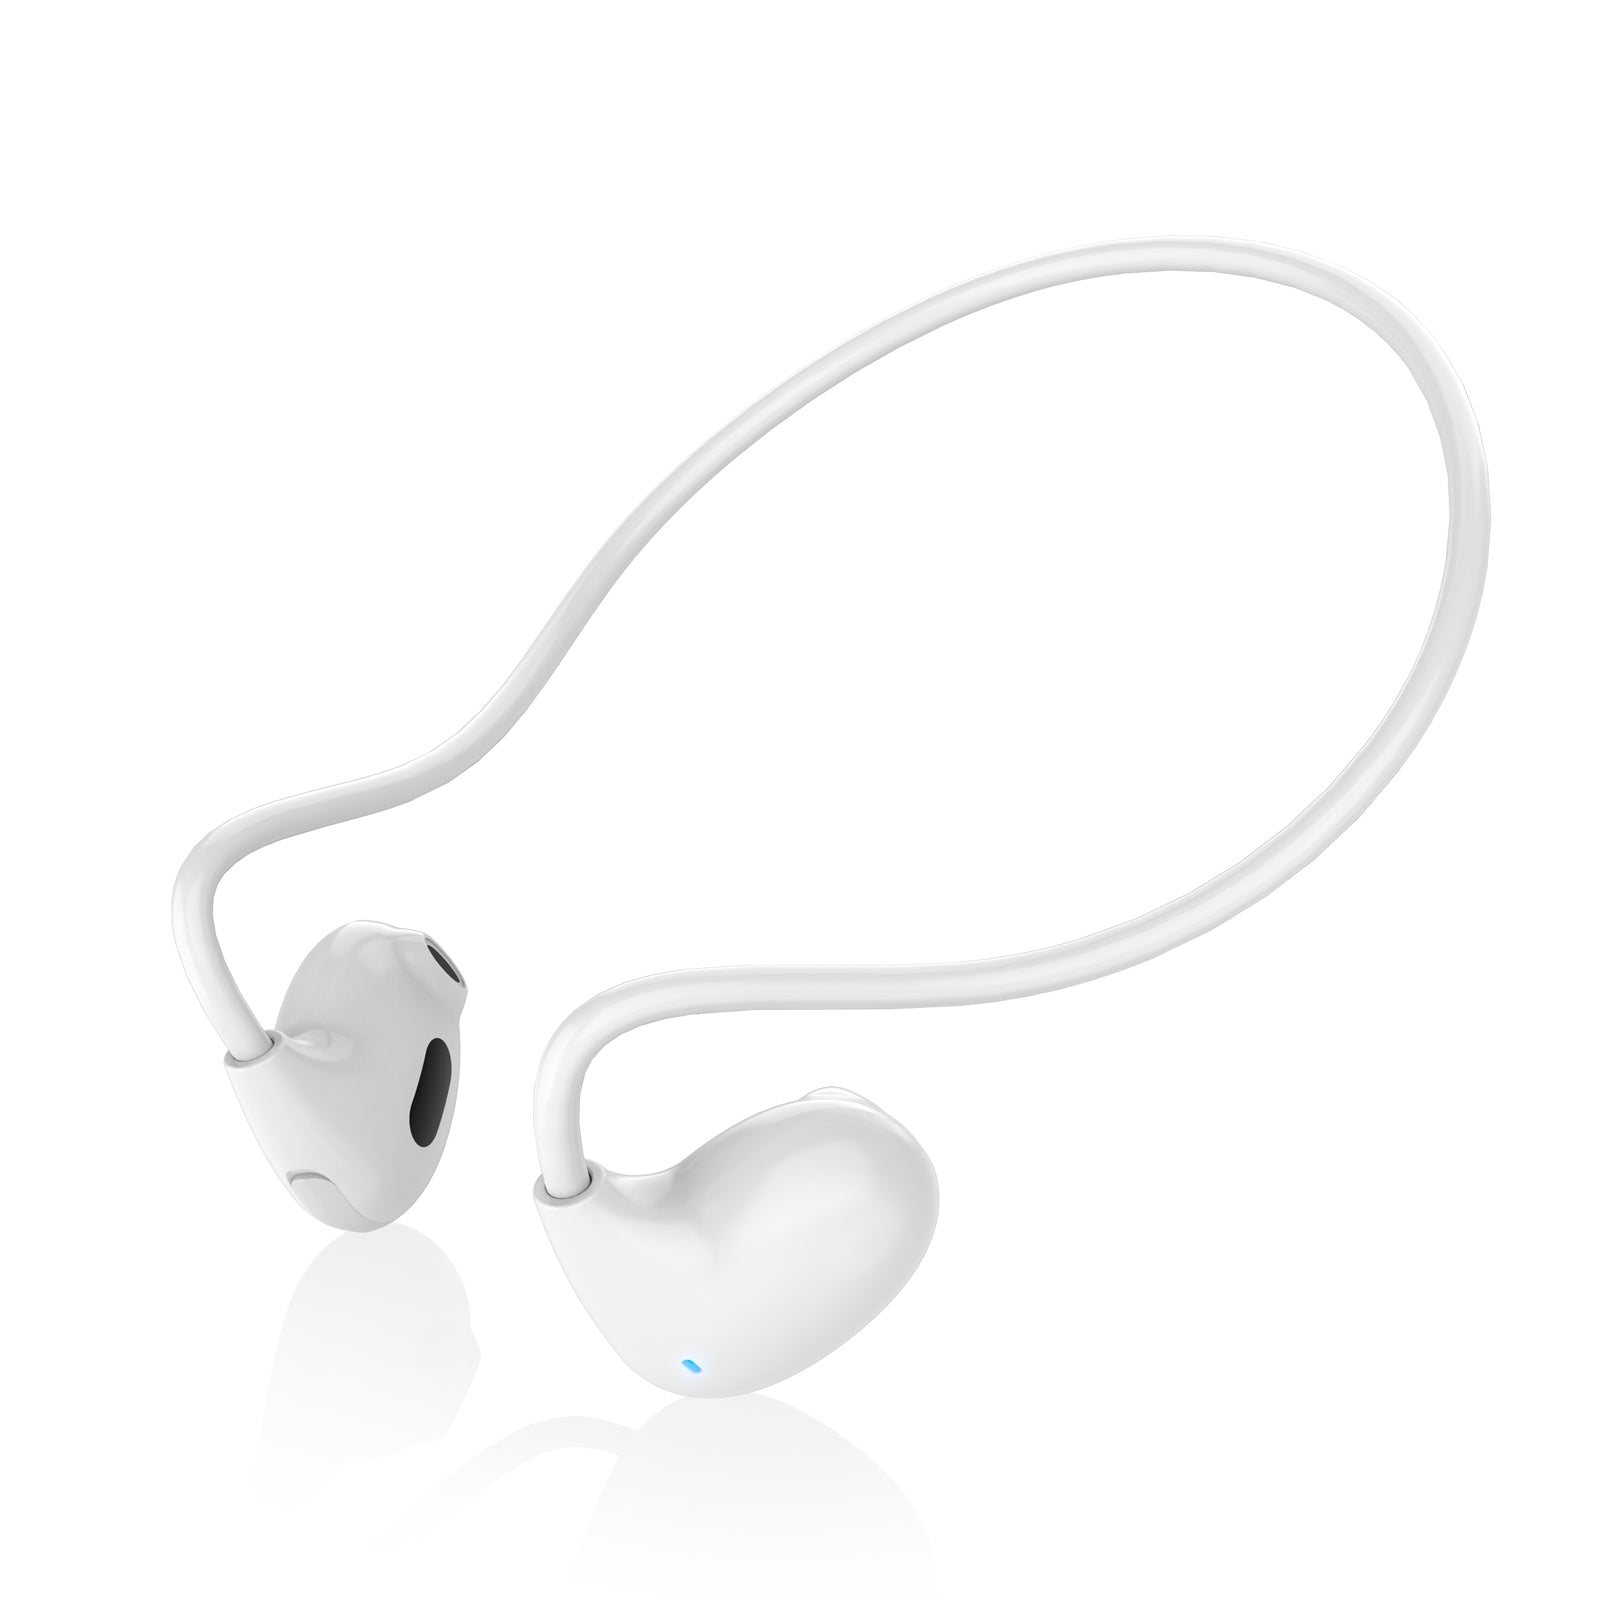 Open Ear Headphones, Air Conduction Headphones with HD Mic